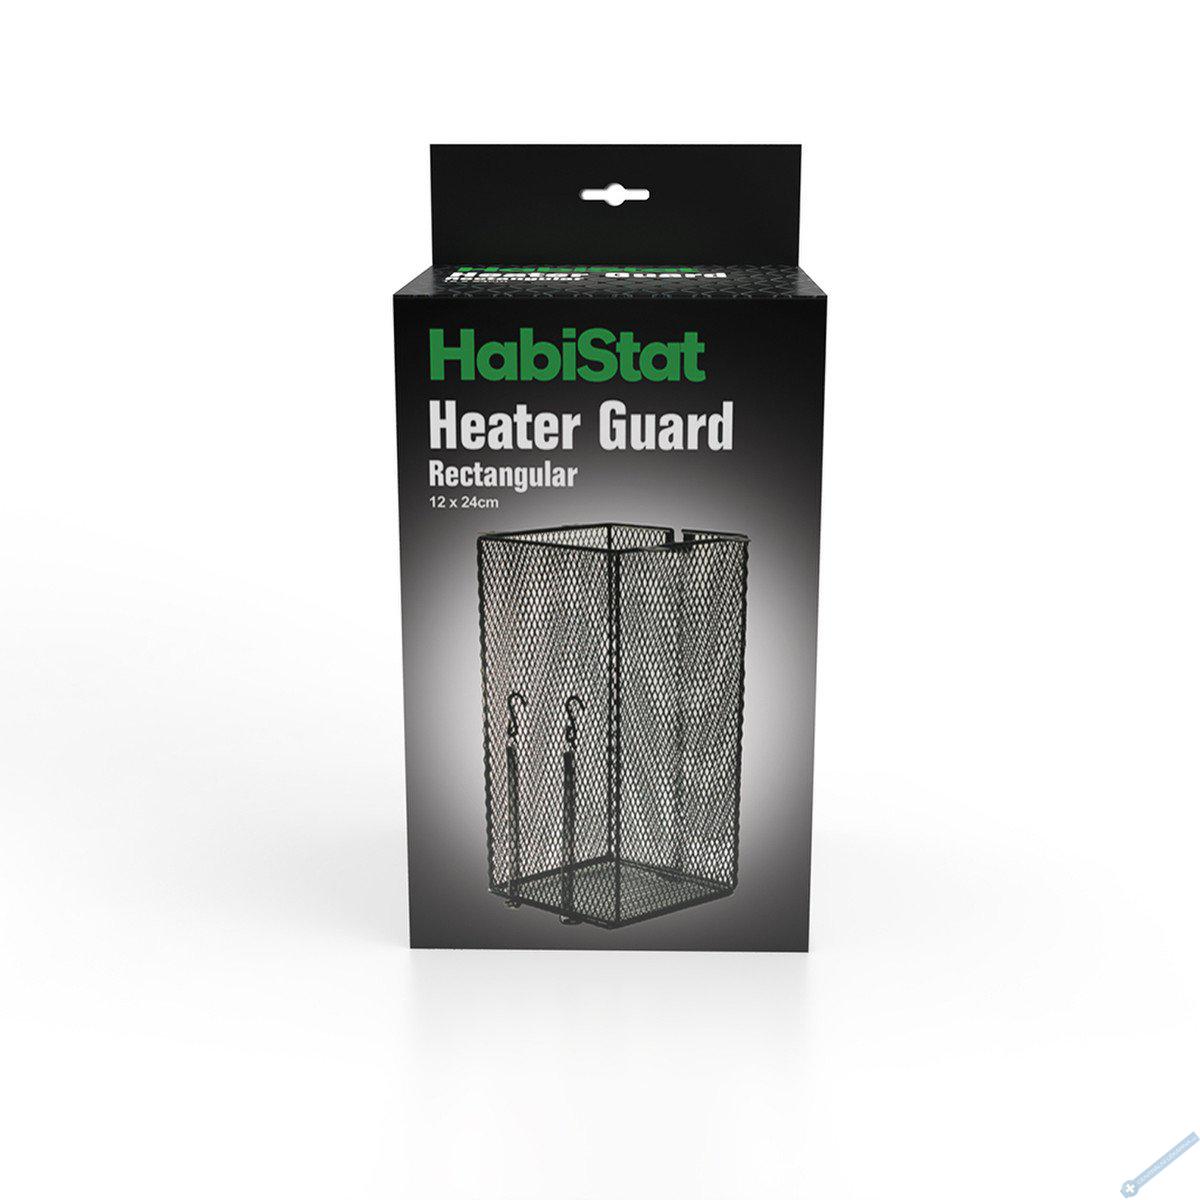 HabiStat Heater Guard 12x24cm